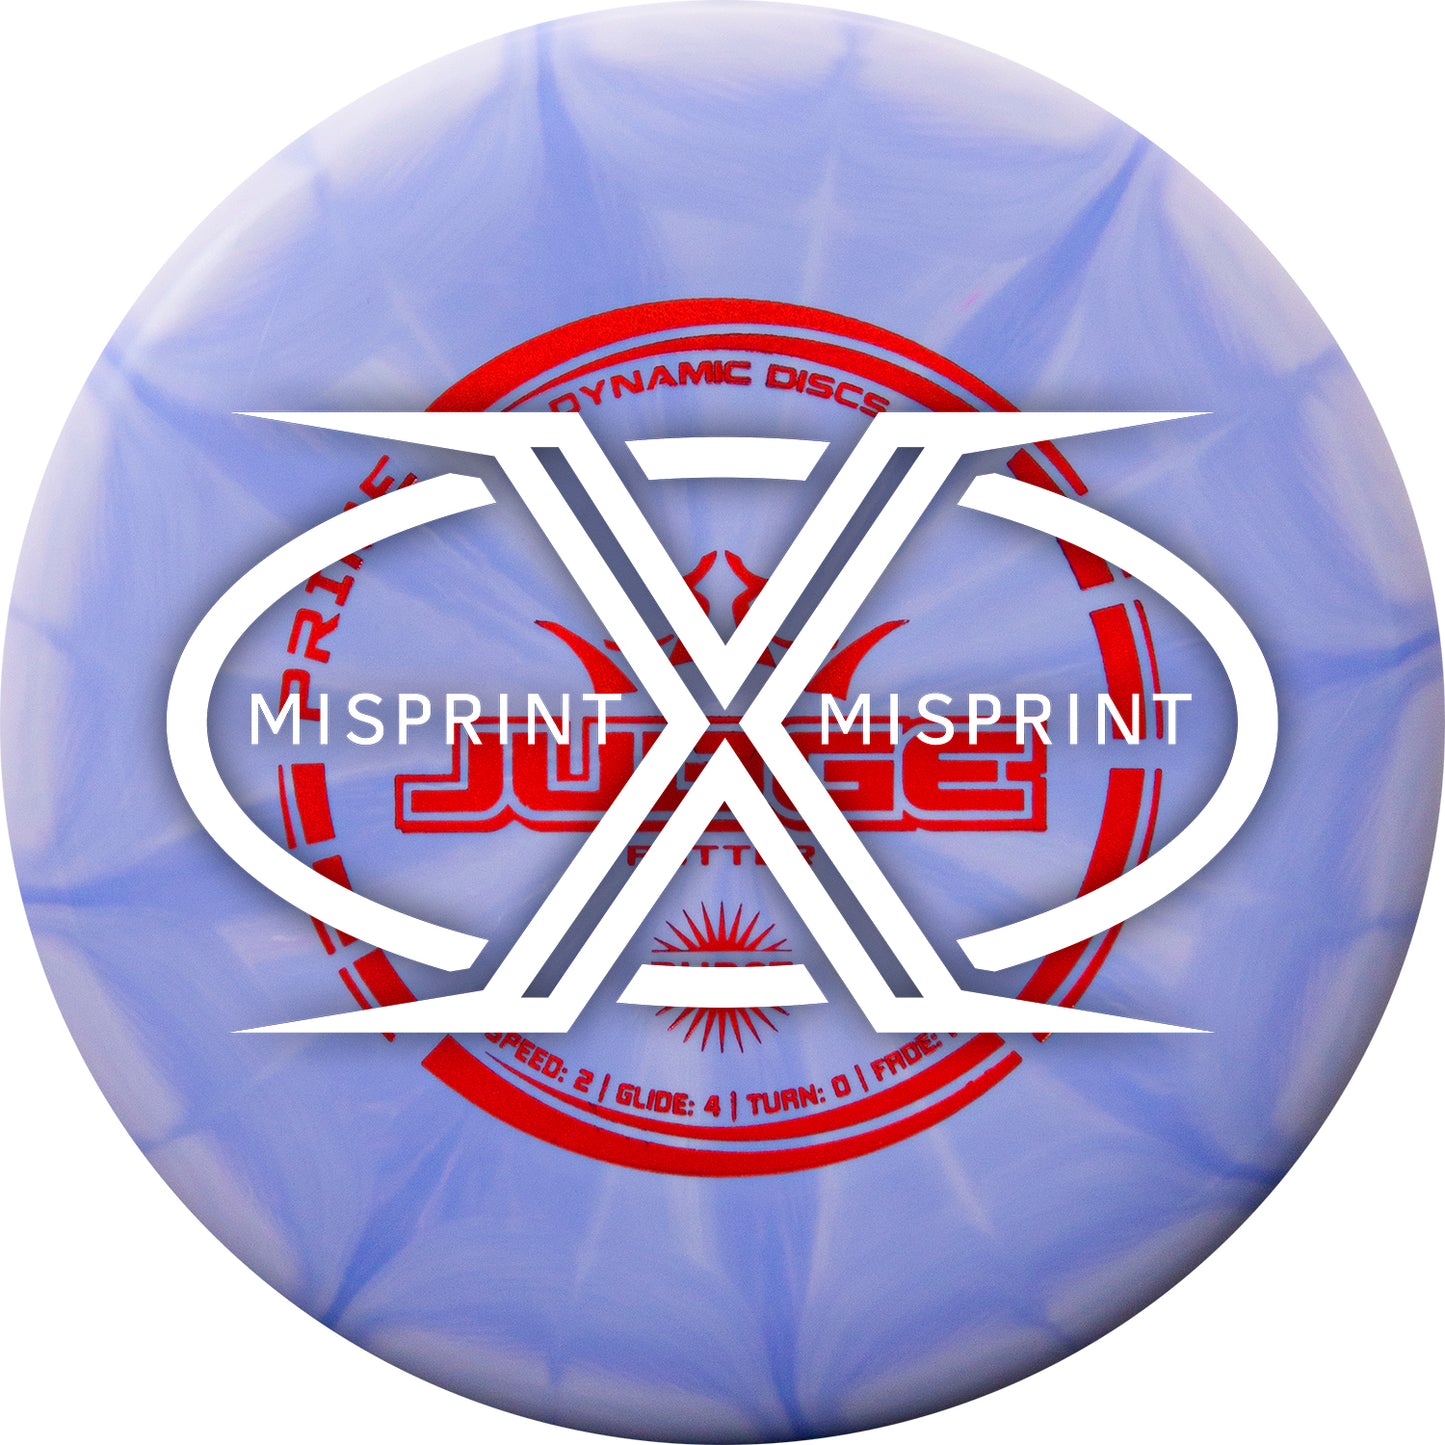 Misprint Dynamic Discs Prime Burst Judge